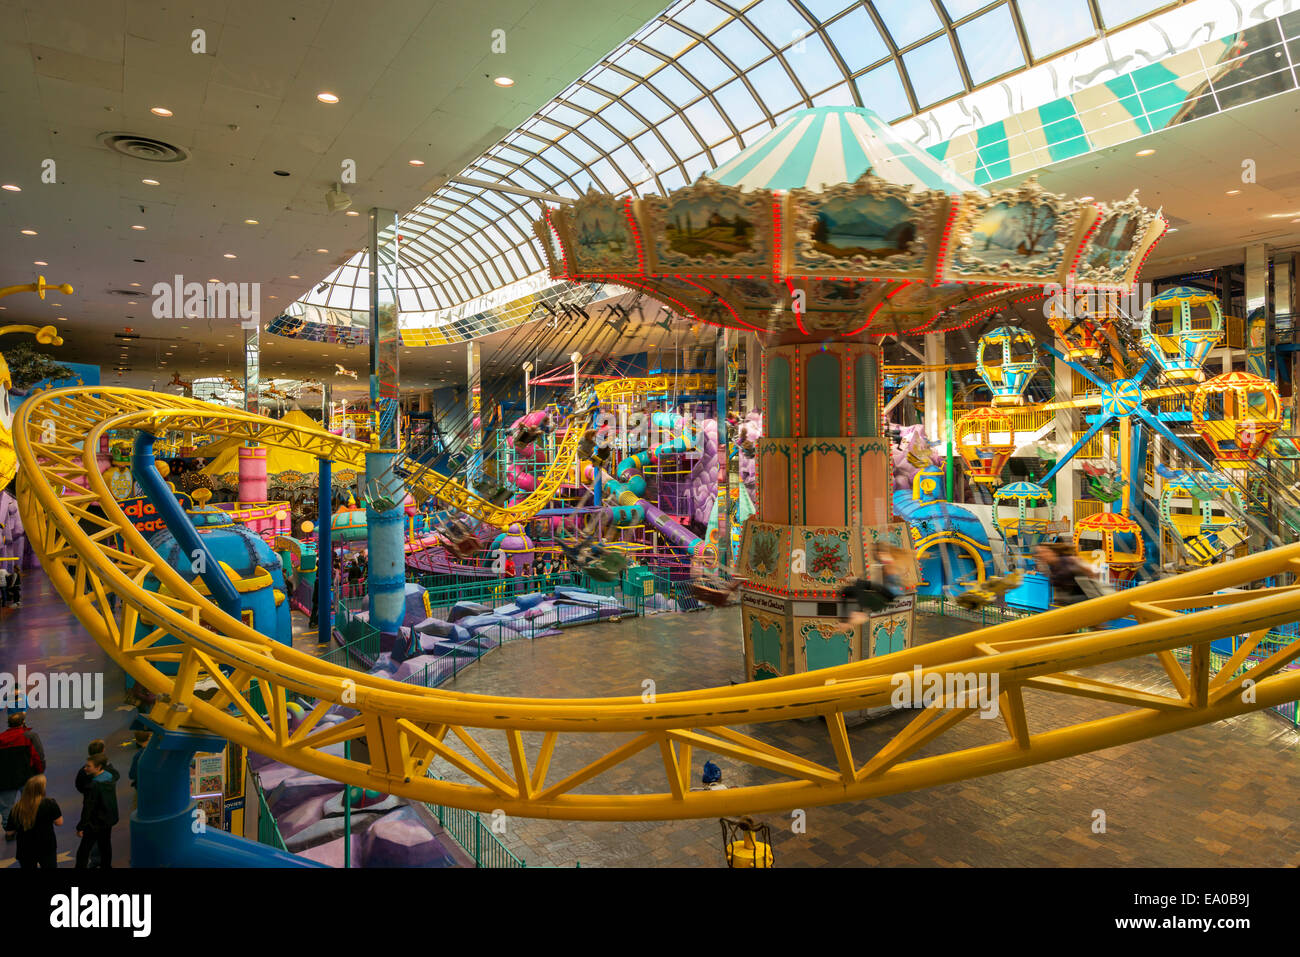 Mall Roller Coaster Banque D Image Et Photos Alamy